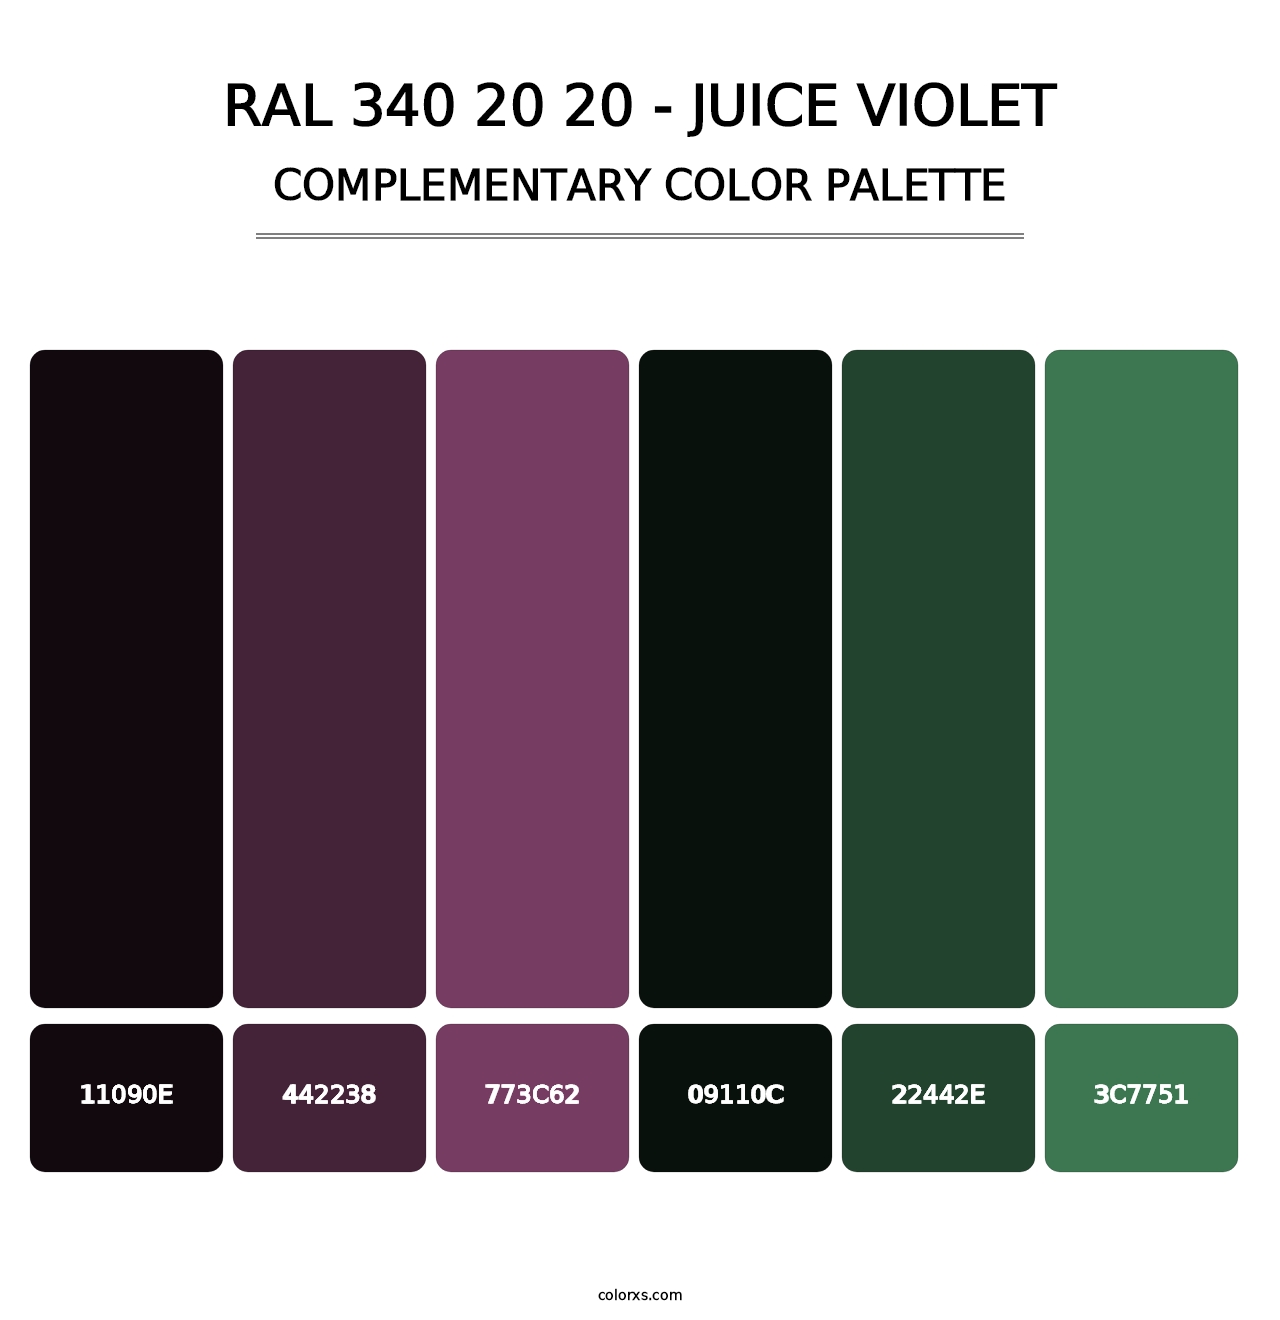 RAL 340 20 20 - Juice Violet - Complementary Color Palette